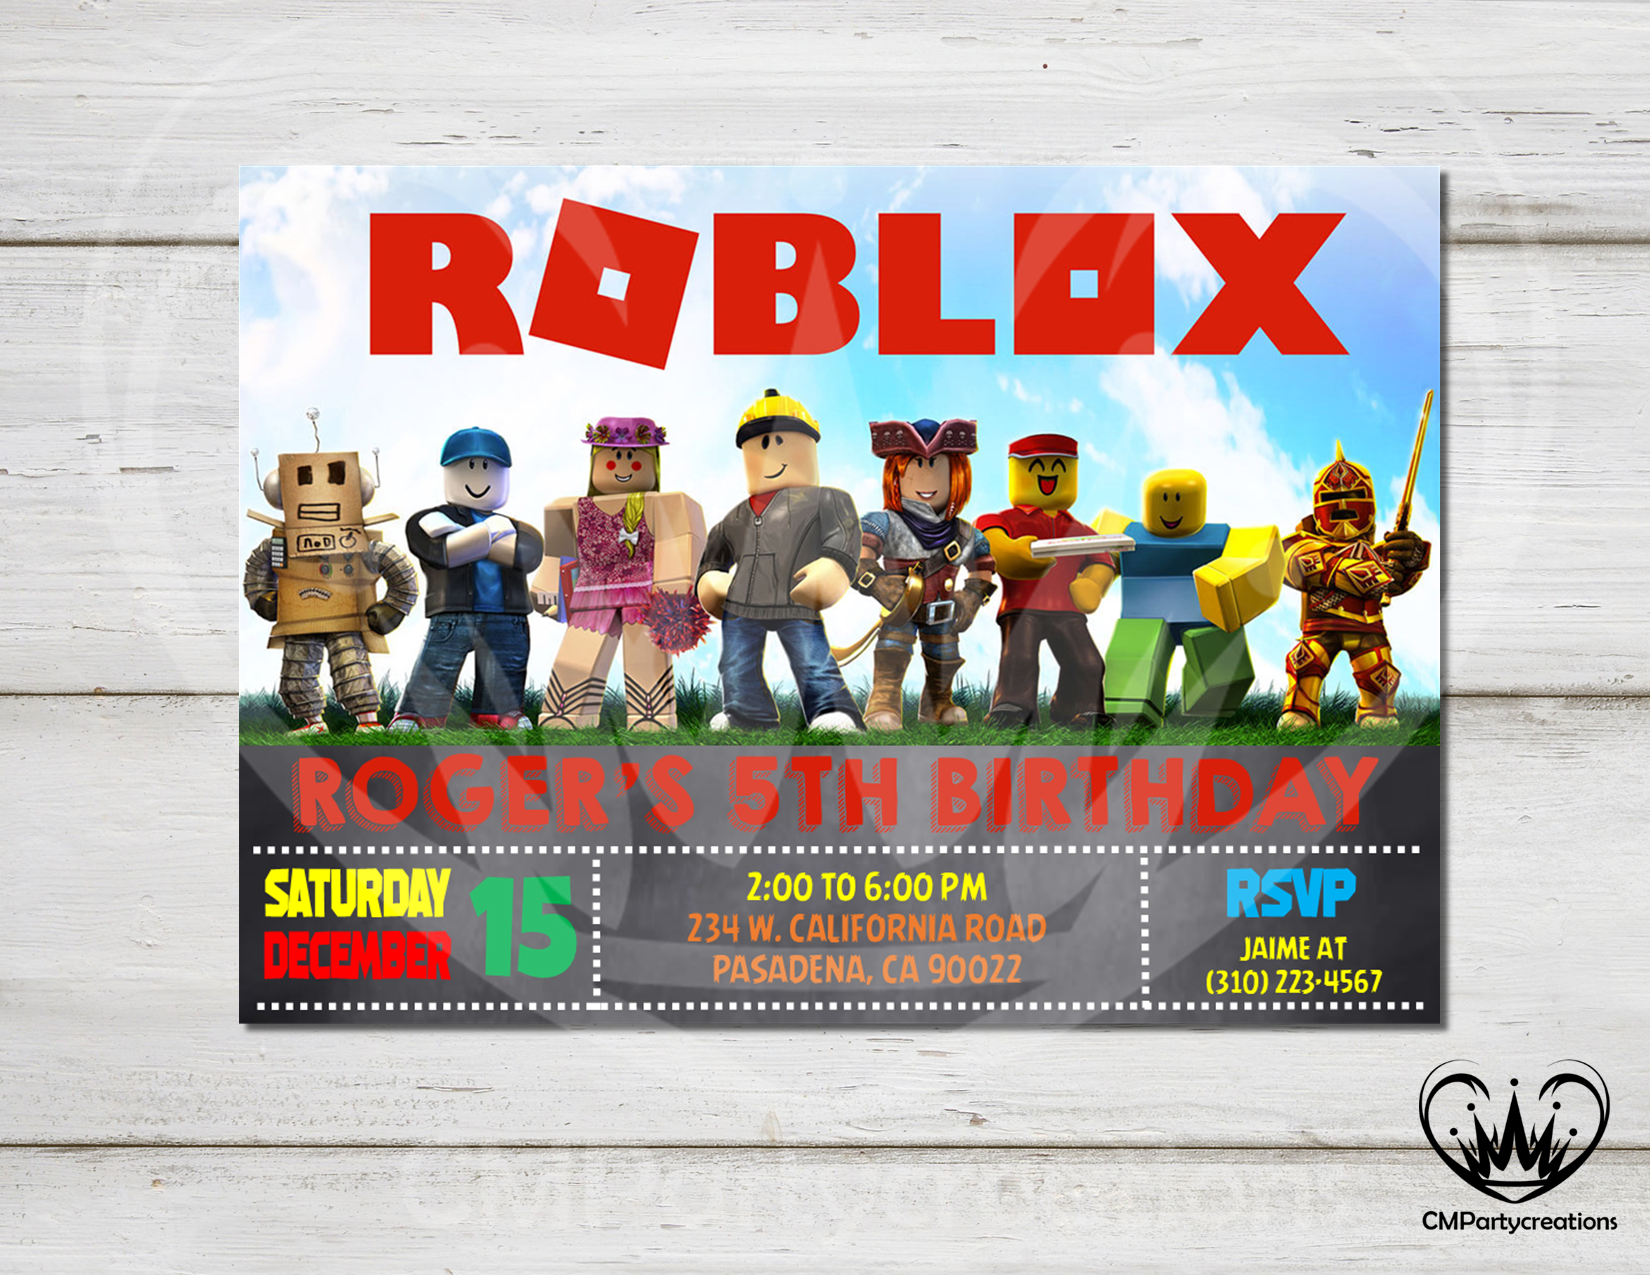 Roblox Group Invitation Birthday Party Cmpartycreations - roblox birthday invitations